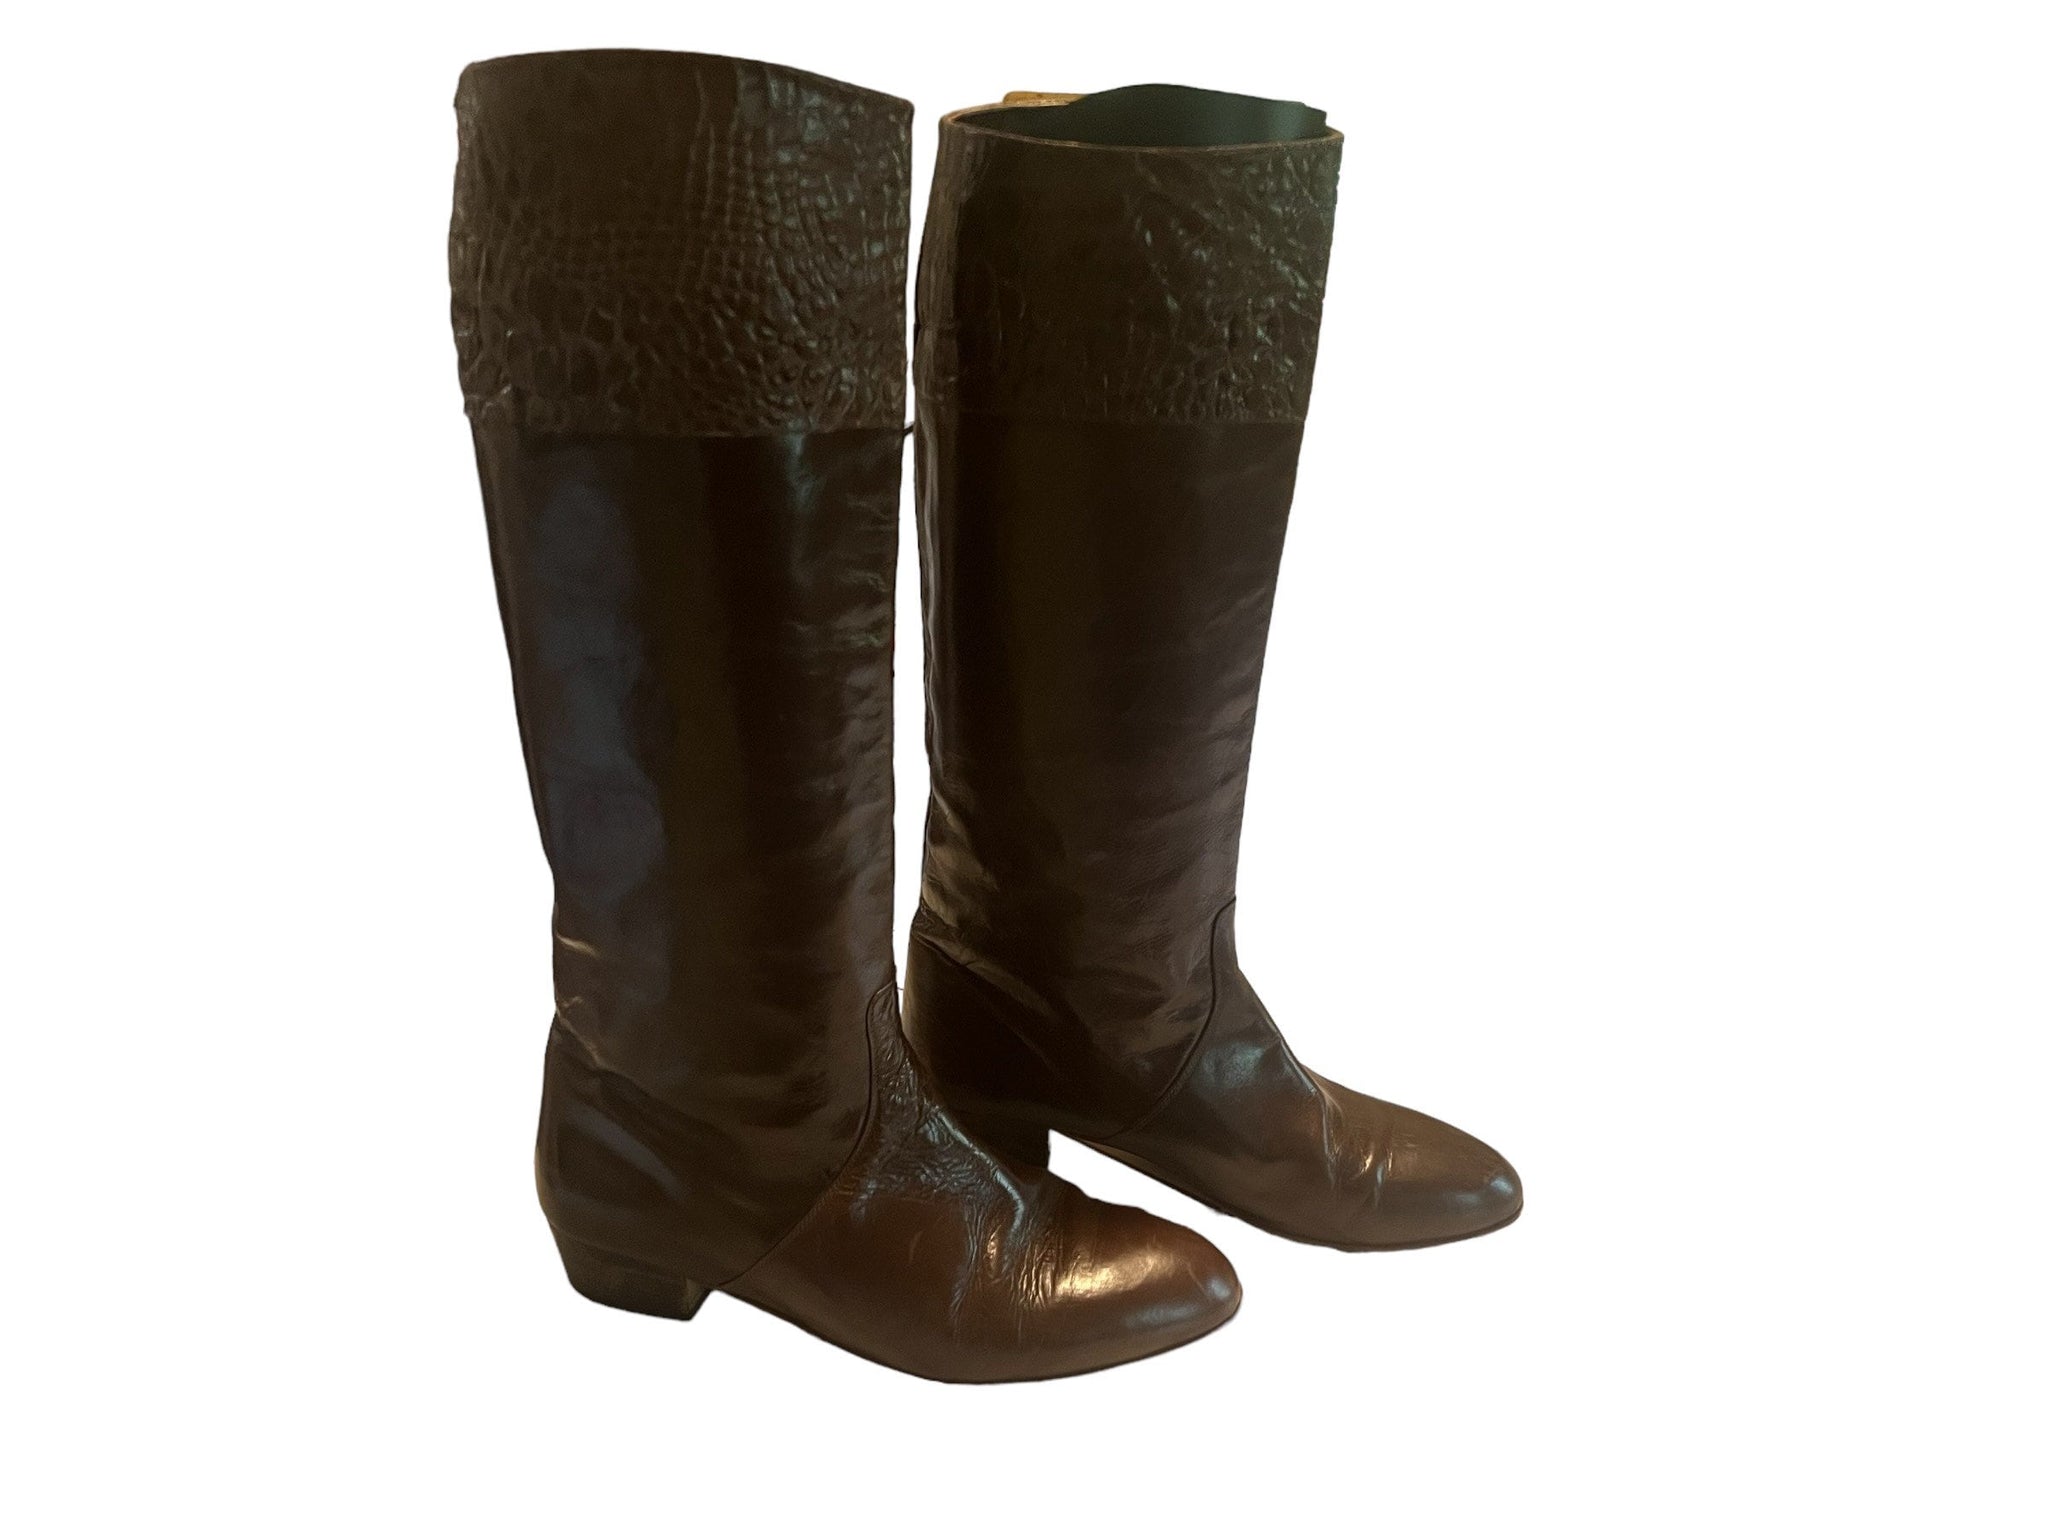 Vintage black knee high leather boots 10 AA